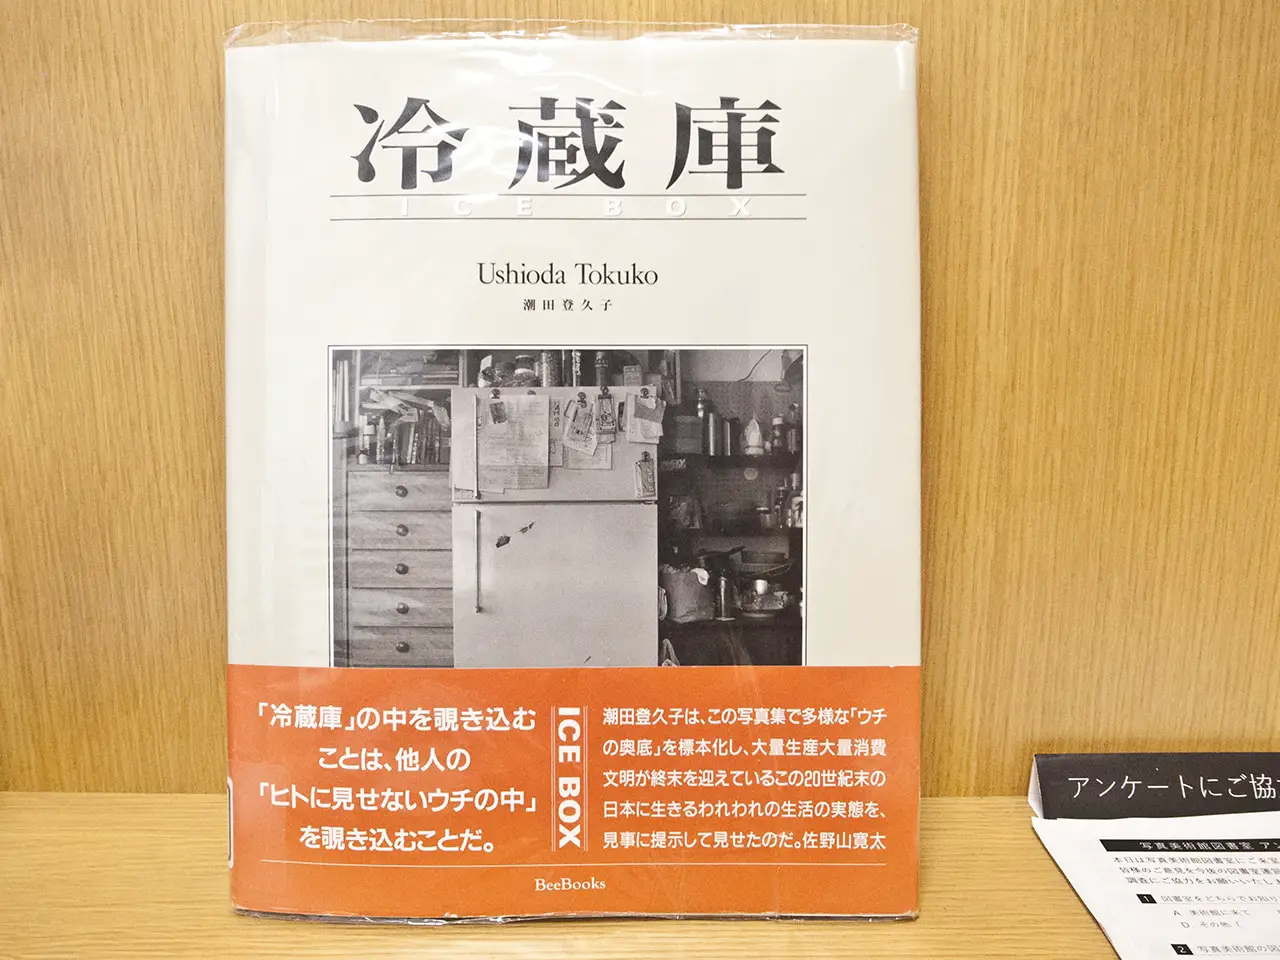 Jesse’s Book Review – Ice Box by Ushioda Tokuko